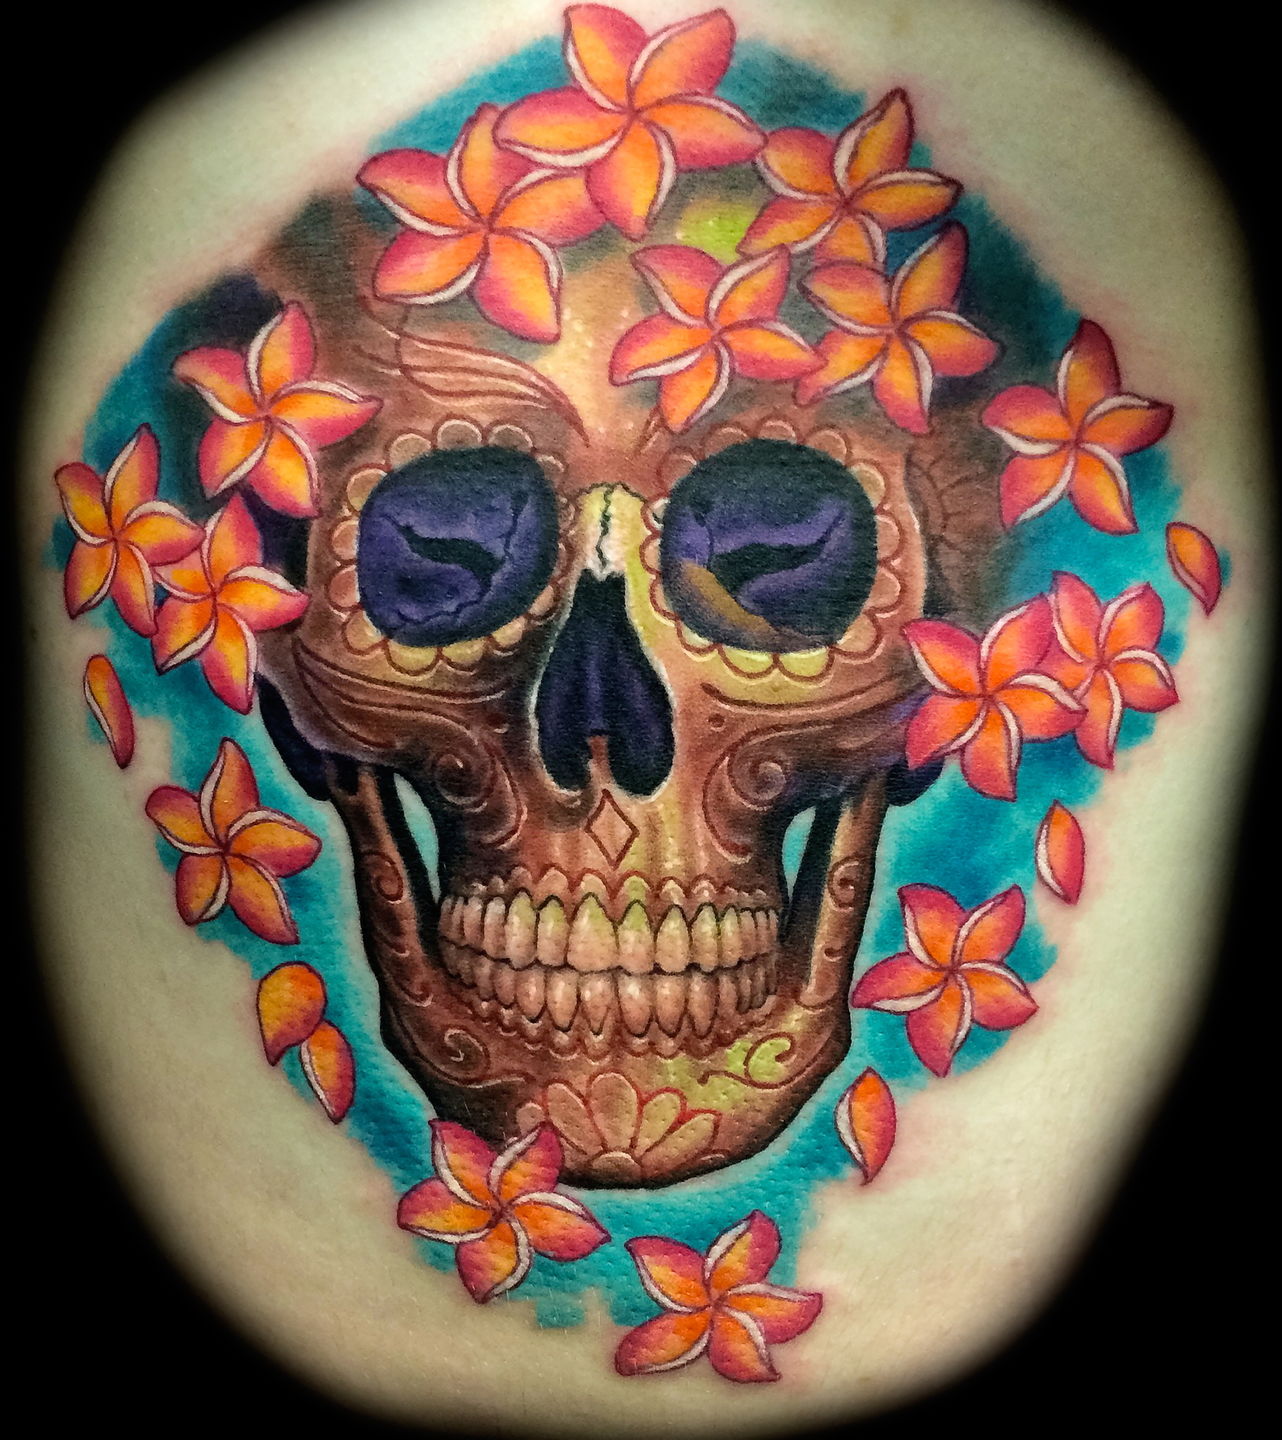 Las-vegas-tattoo-artist_joe-riley_skull-plumeria-flowers-tattoo-best-las-vegas-tattoos-shops-artists